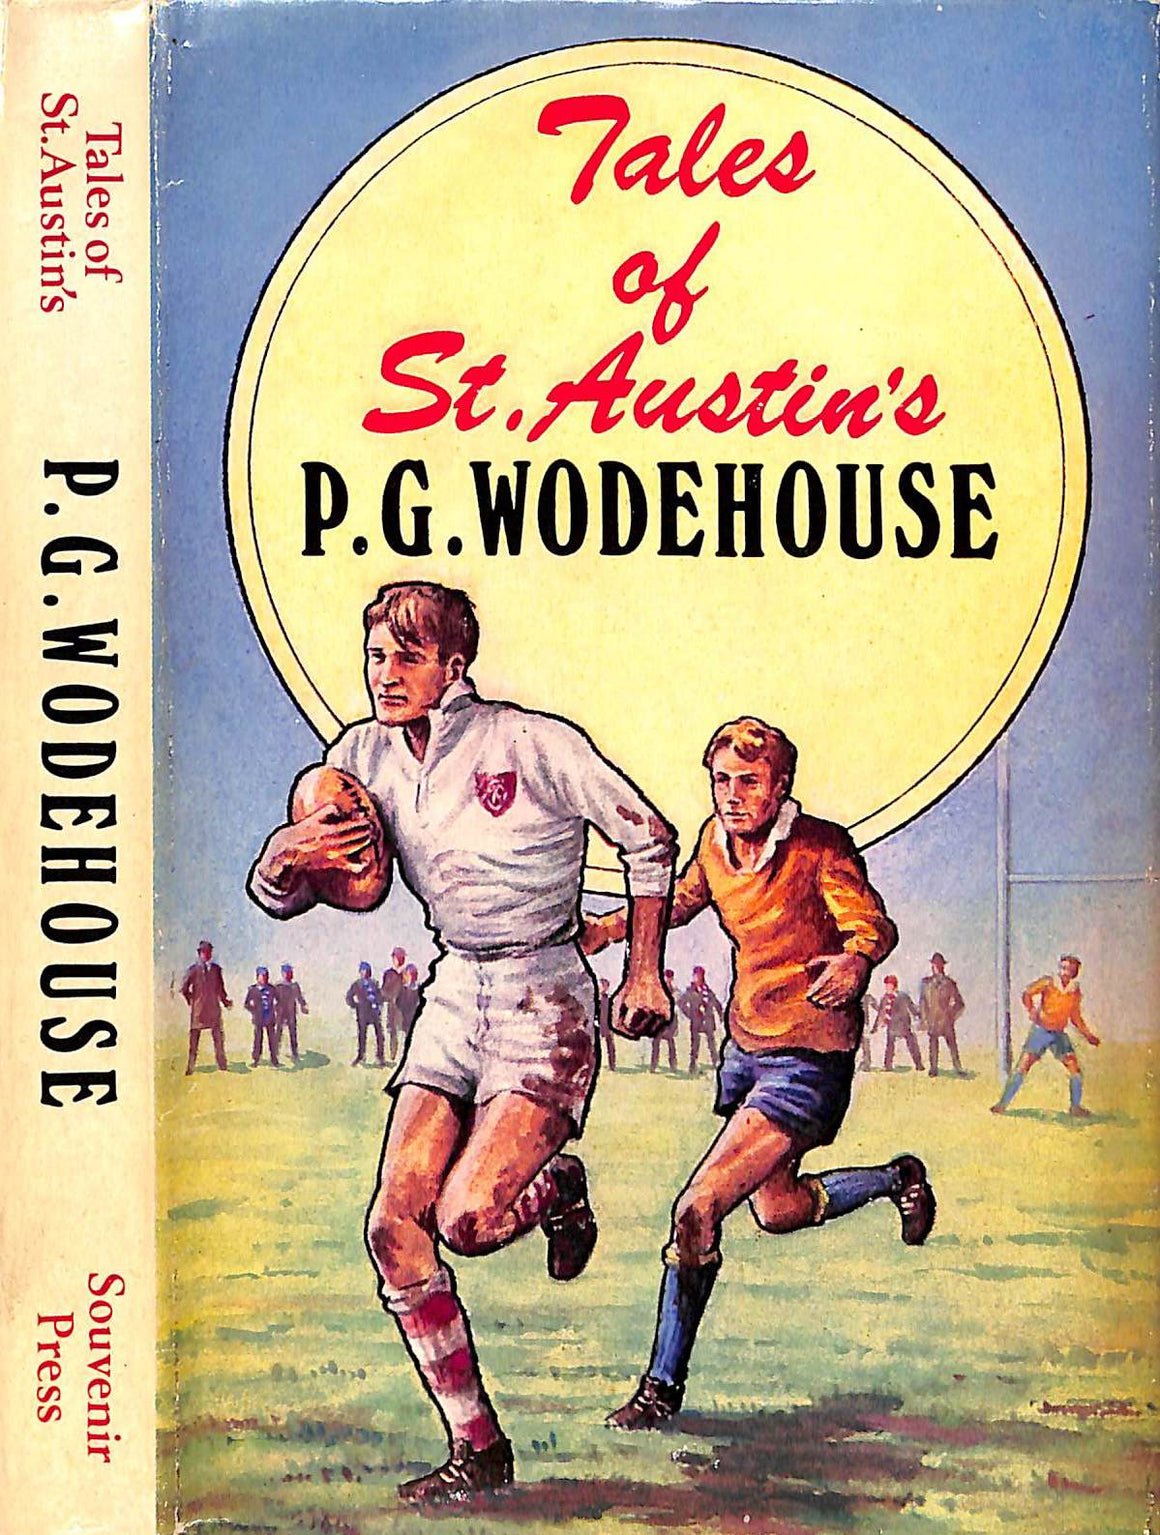 "Tales Of St. Austin's" 1972 WODEHOUSE, P.G.